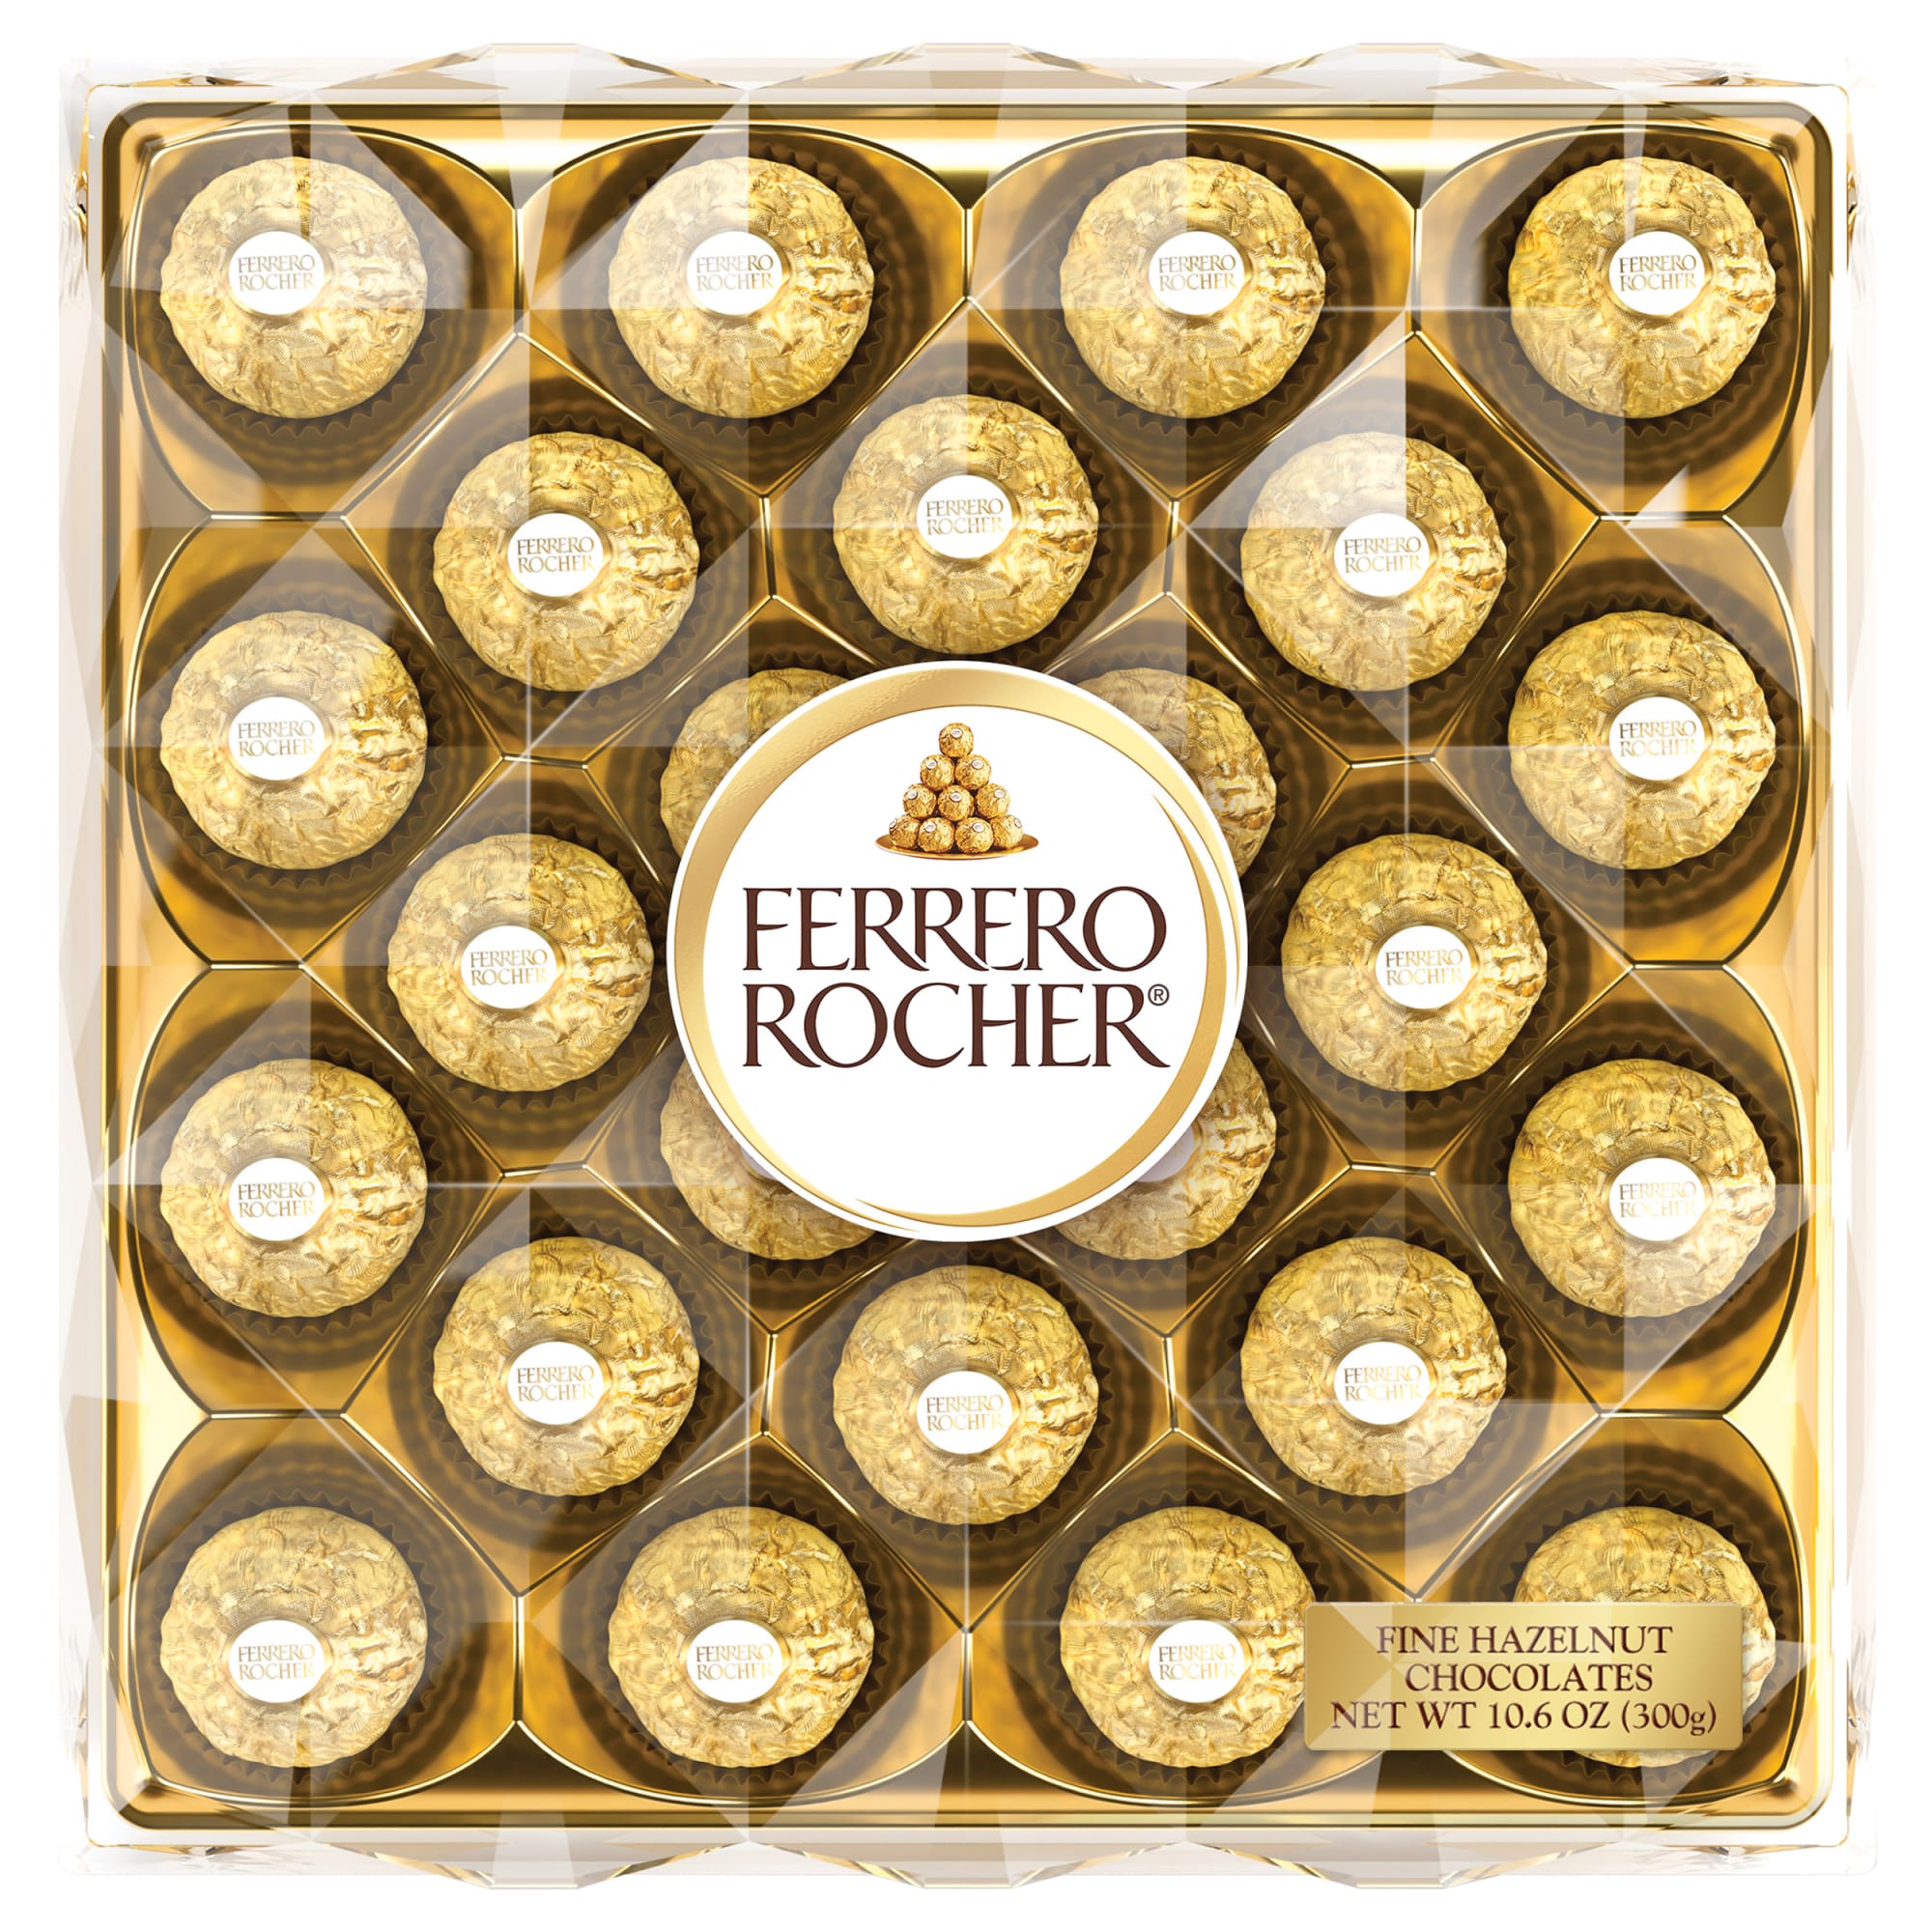 Ferrero Rocher Premium Gourmet Milk Chocolate Hazelnut, Chocolates for Gifting, 24 Count - image 1 of 8